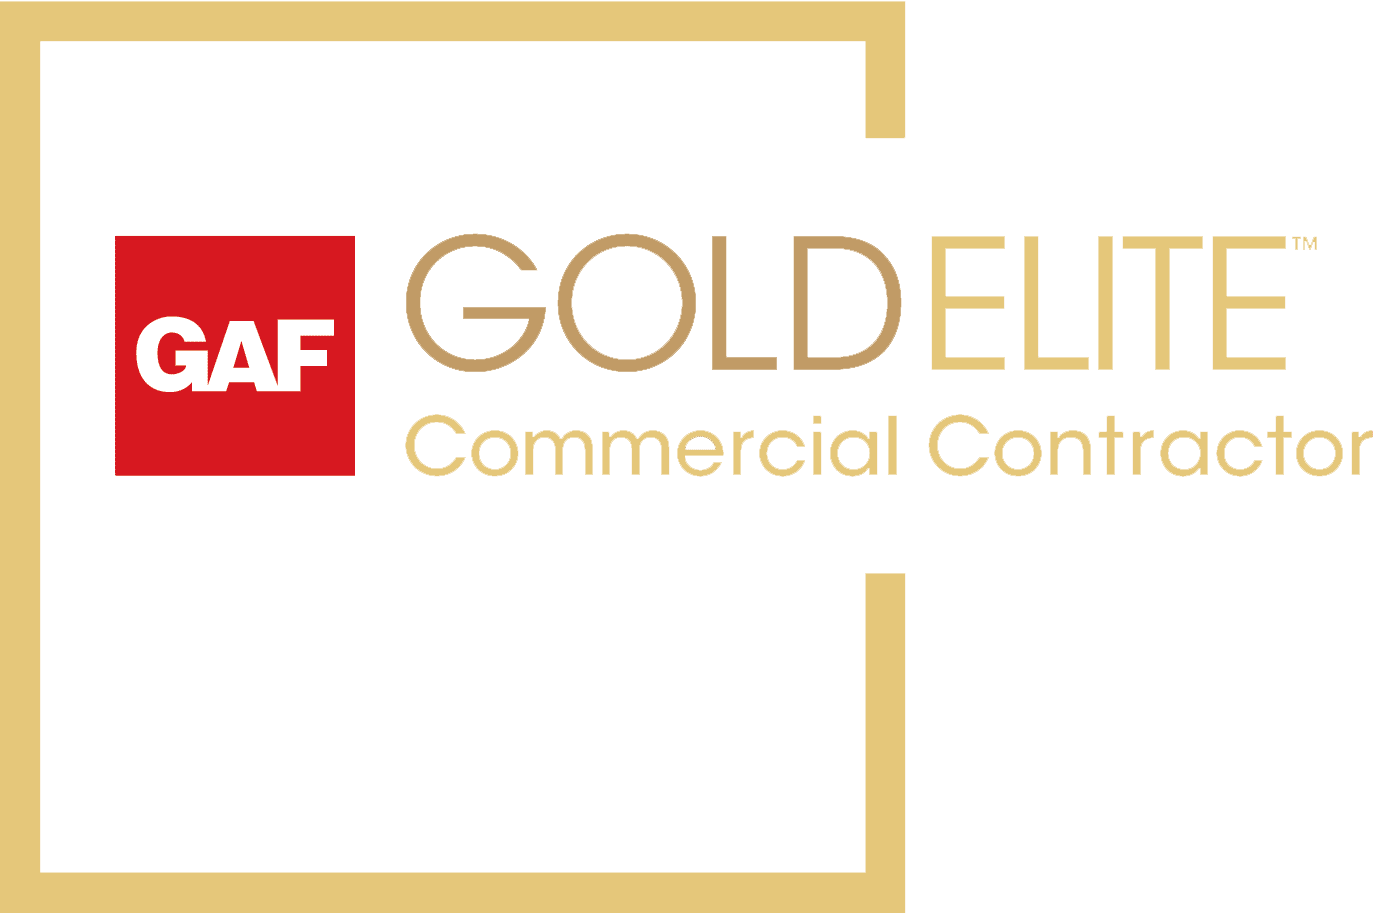 GAF Gold Elite Commercial Contractor